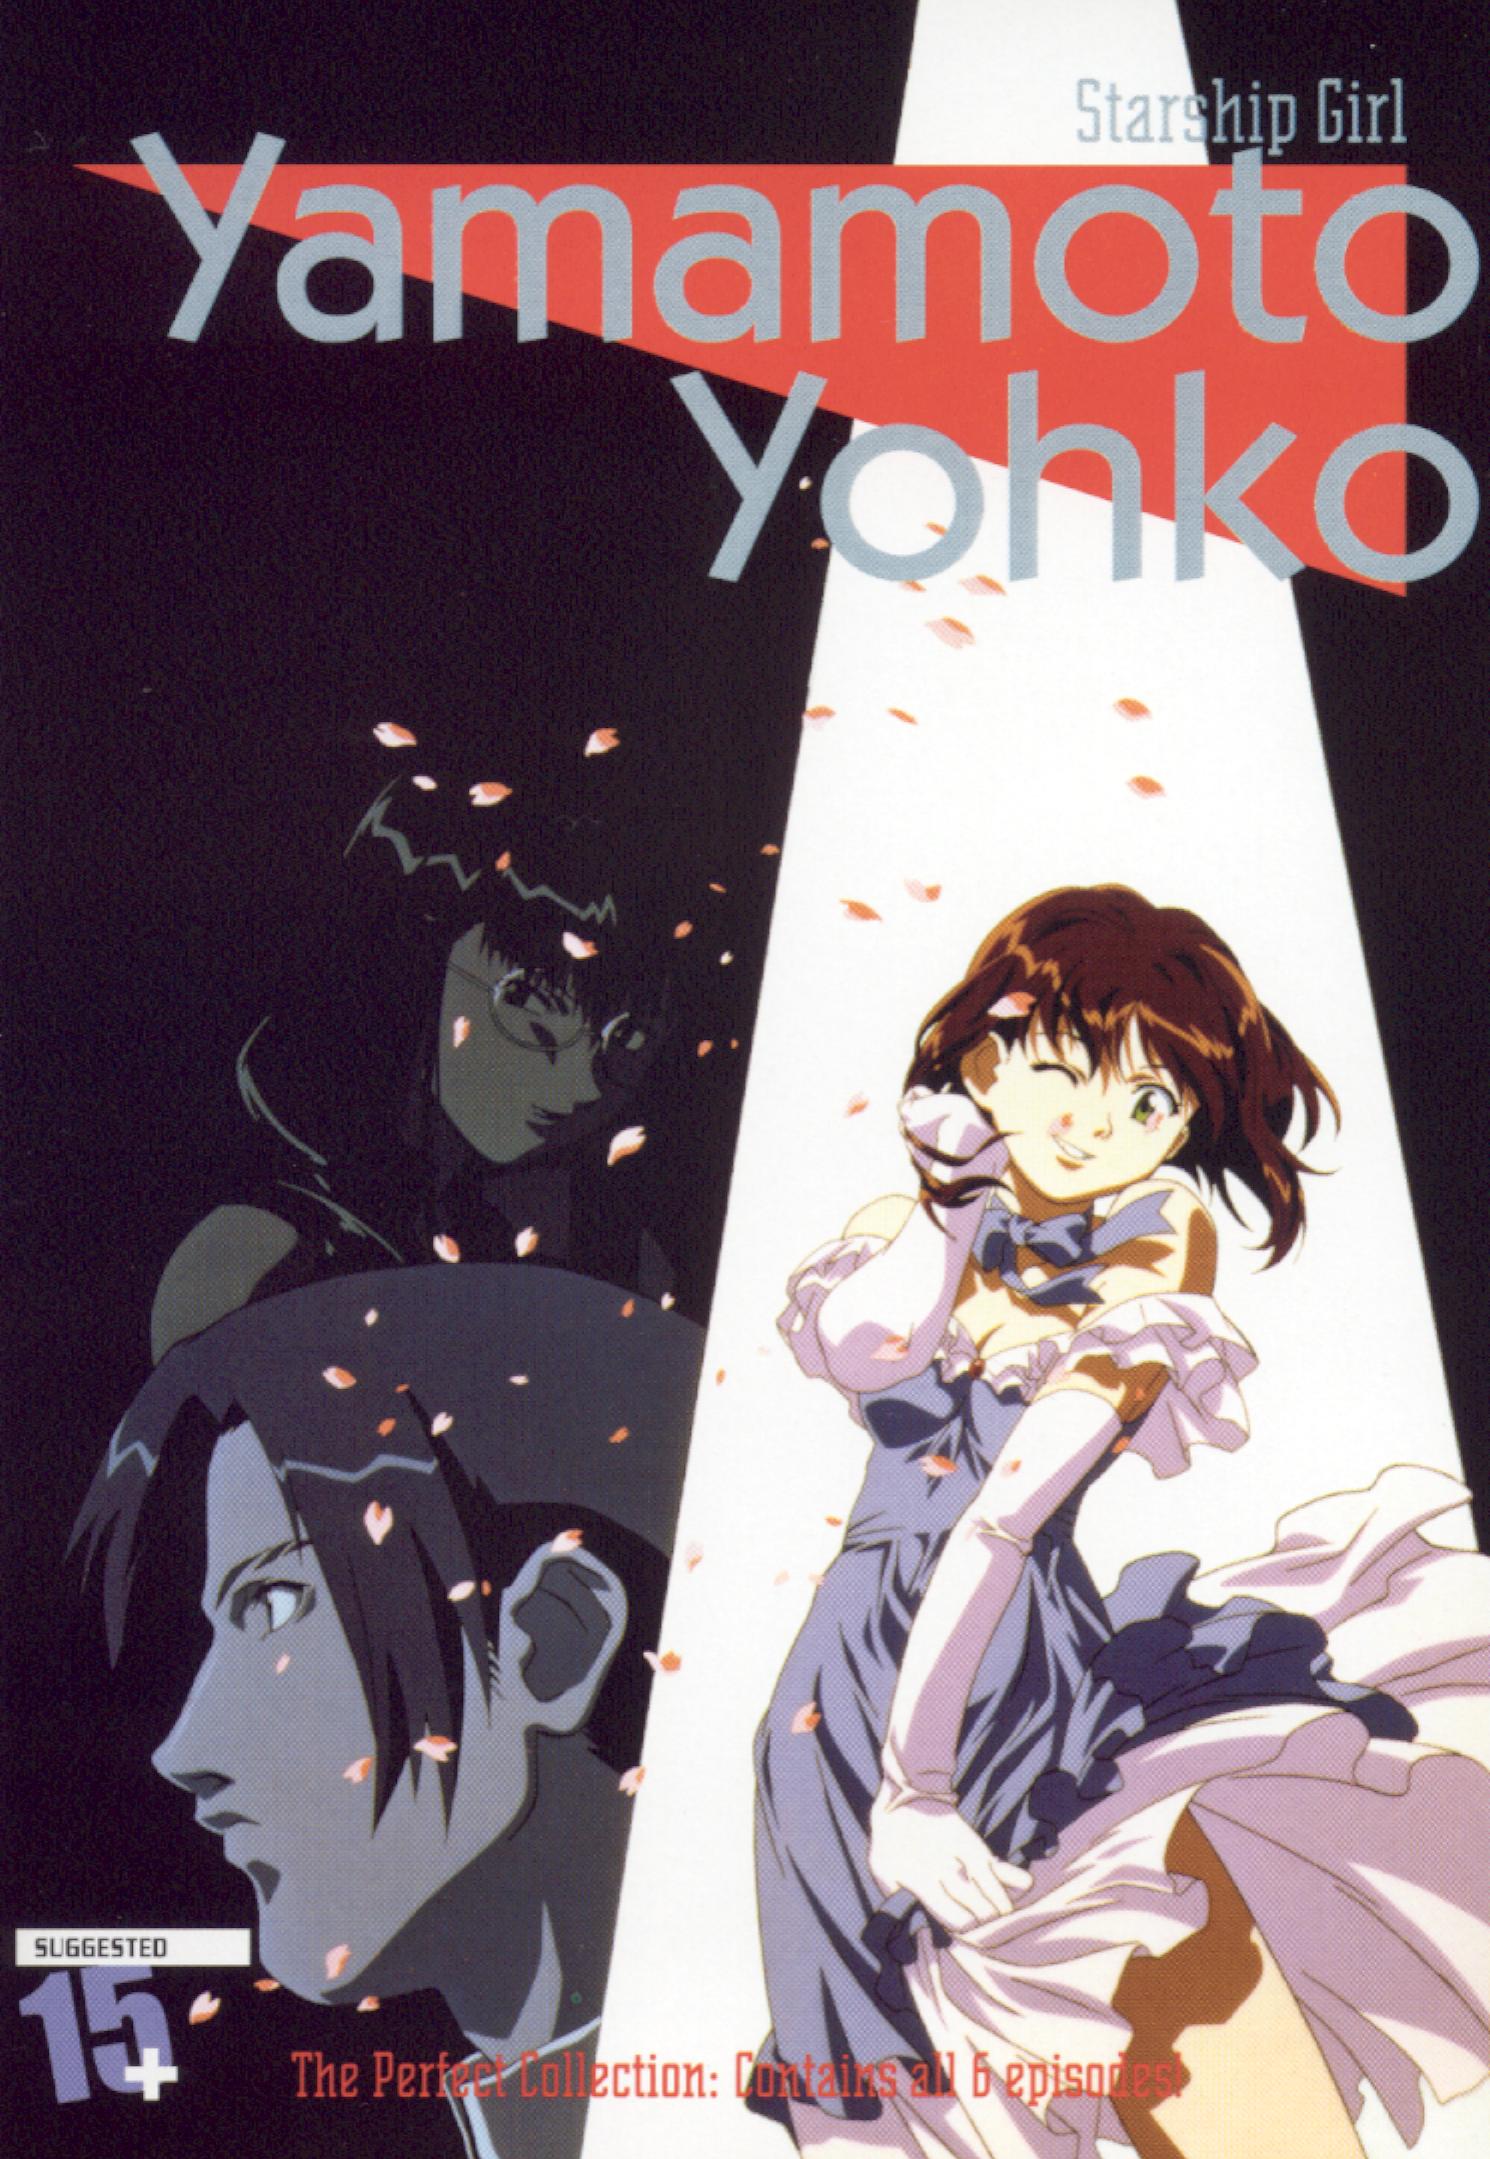 Best Buy: Starship Girl Yamamoto Yohko: The Perfect Collection [DVD]